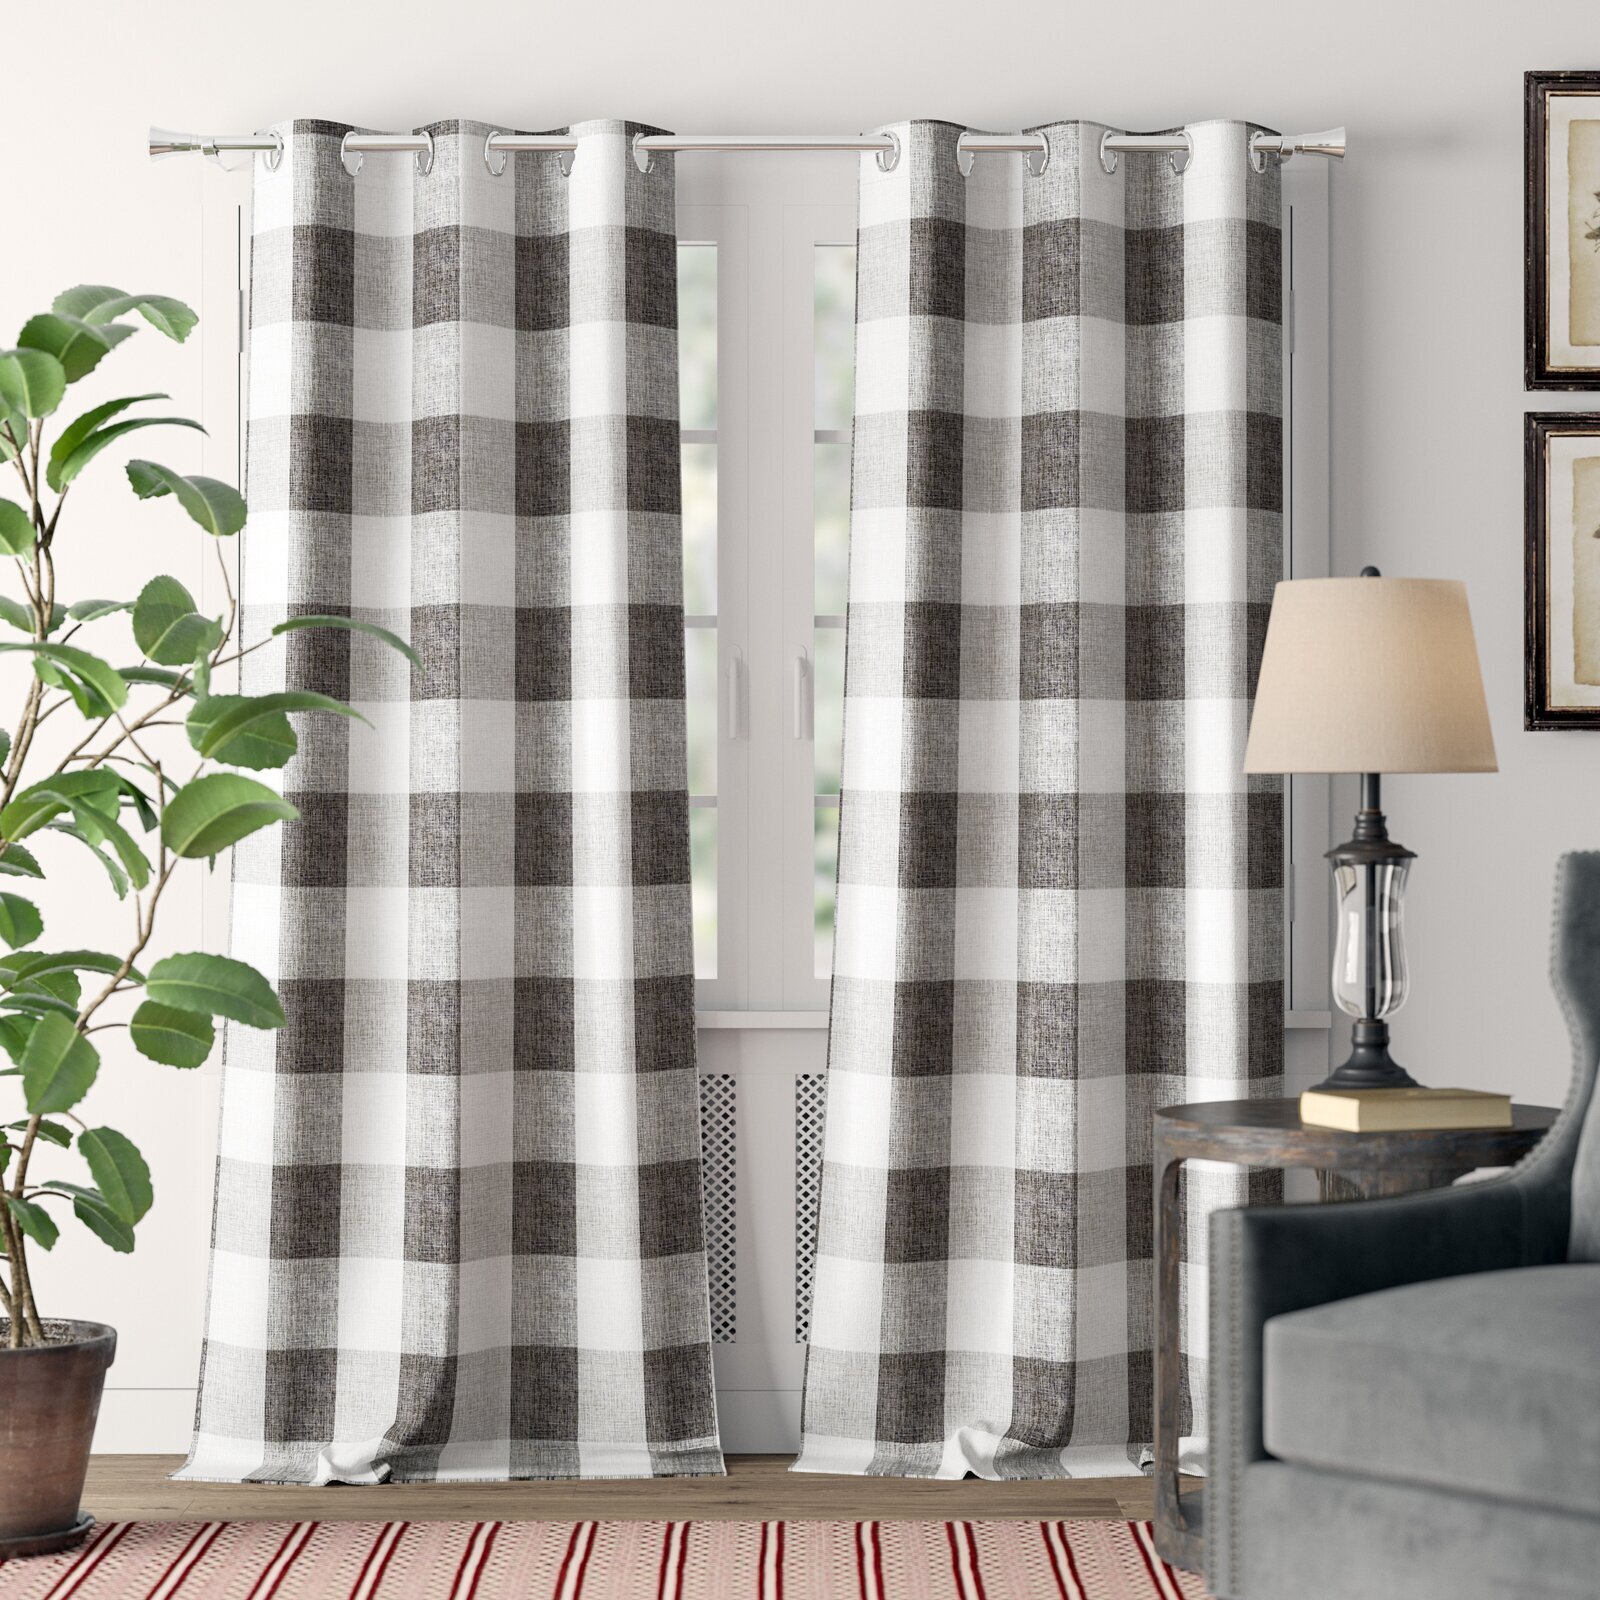 Thermal plaid curtain panels